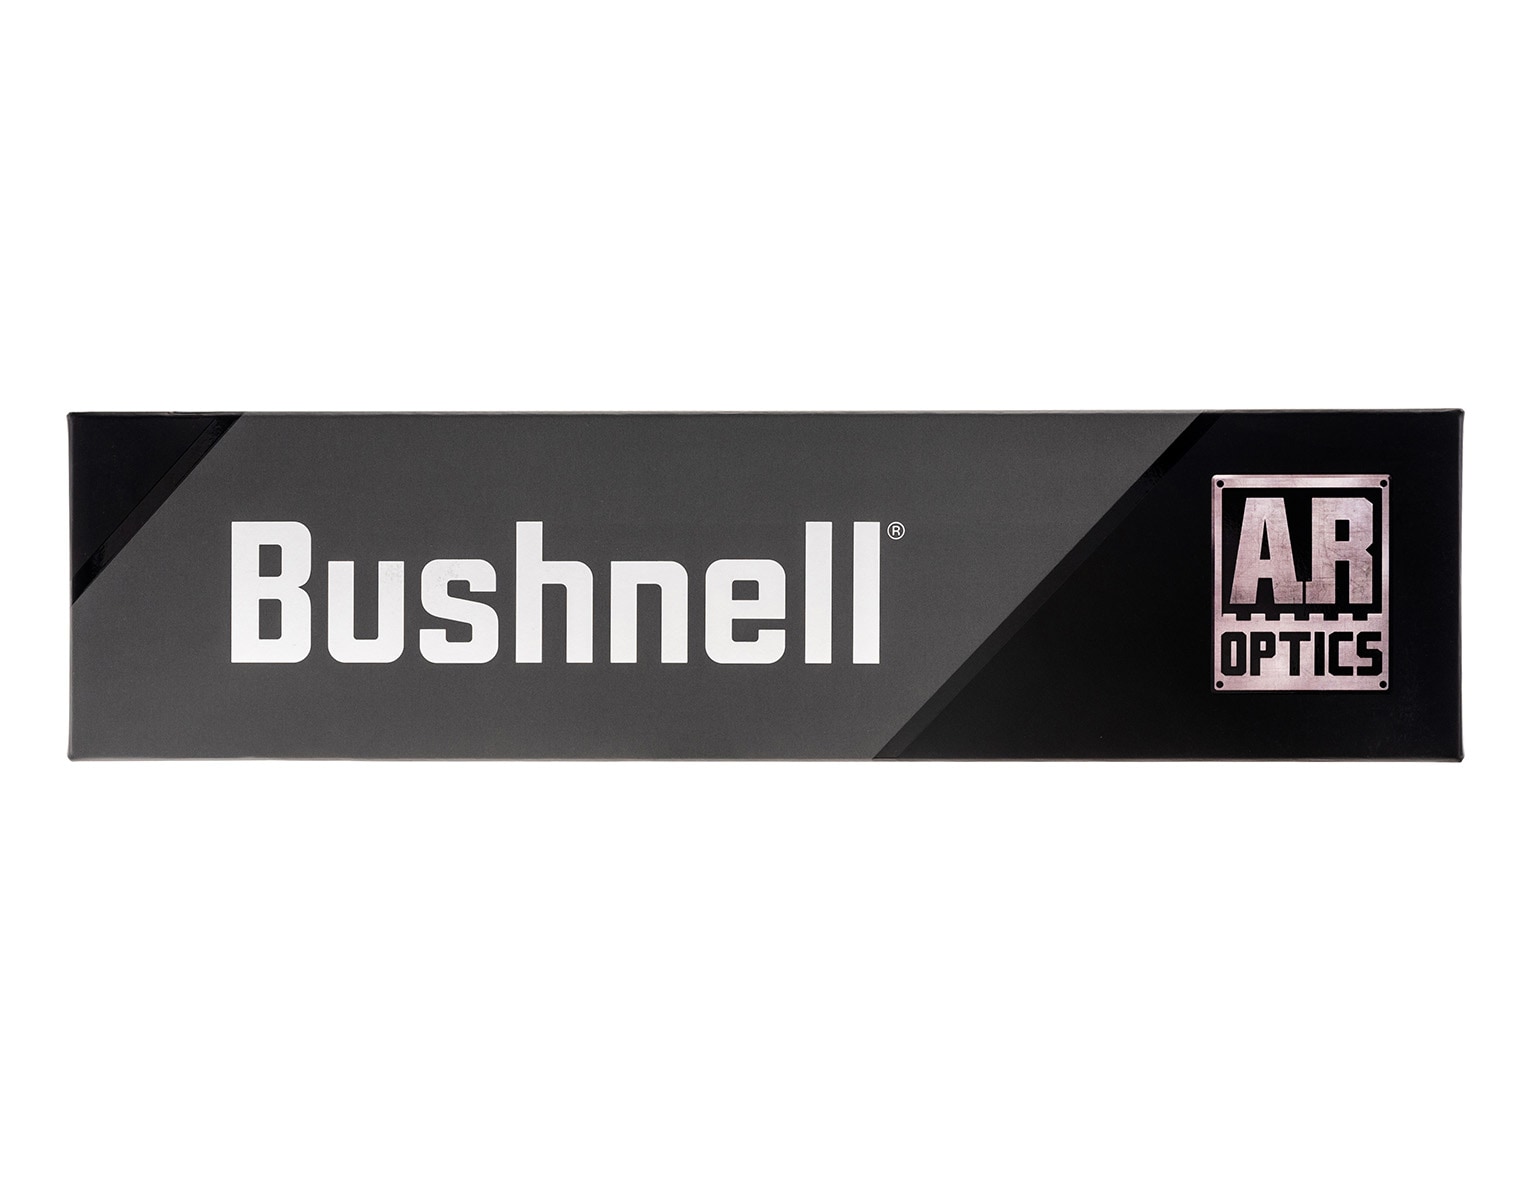 Luneta celownicza Bushnell AR Optics 4.5-18x40 Wind Hold